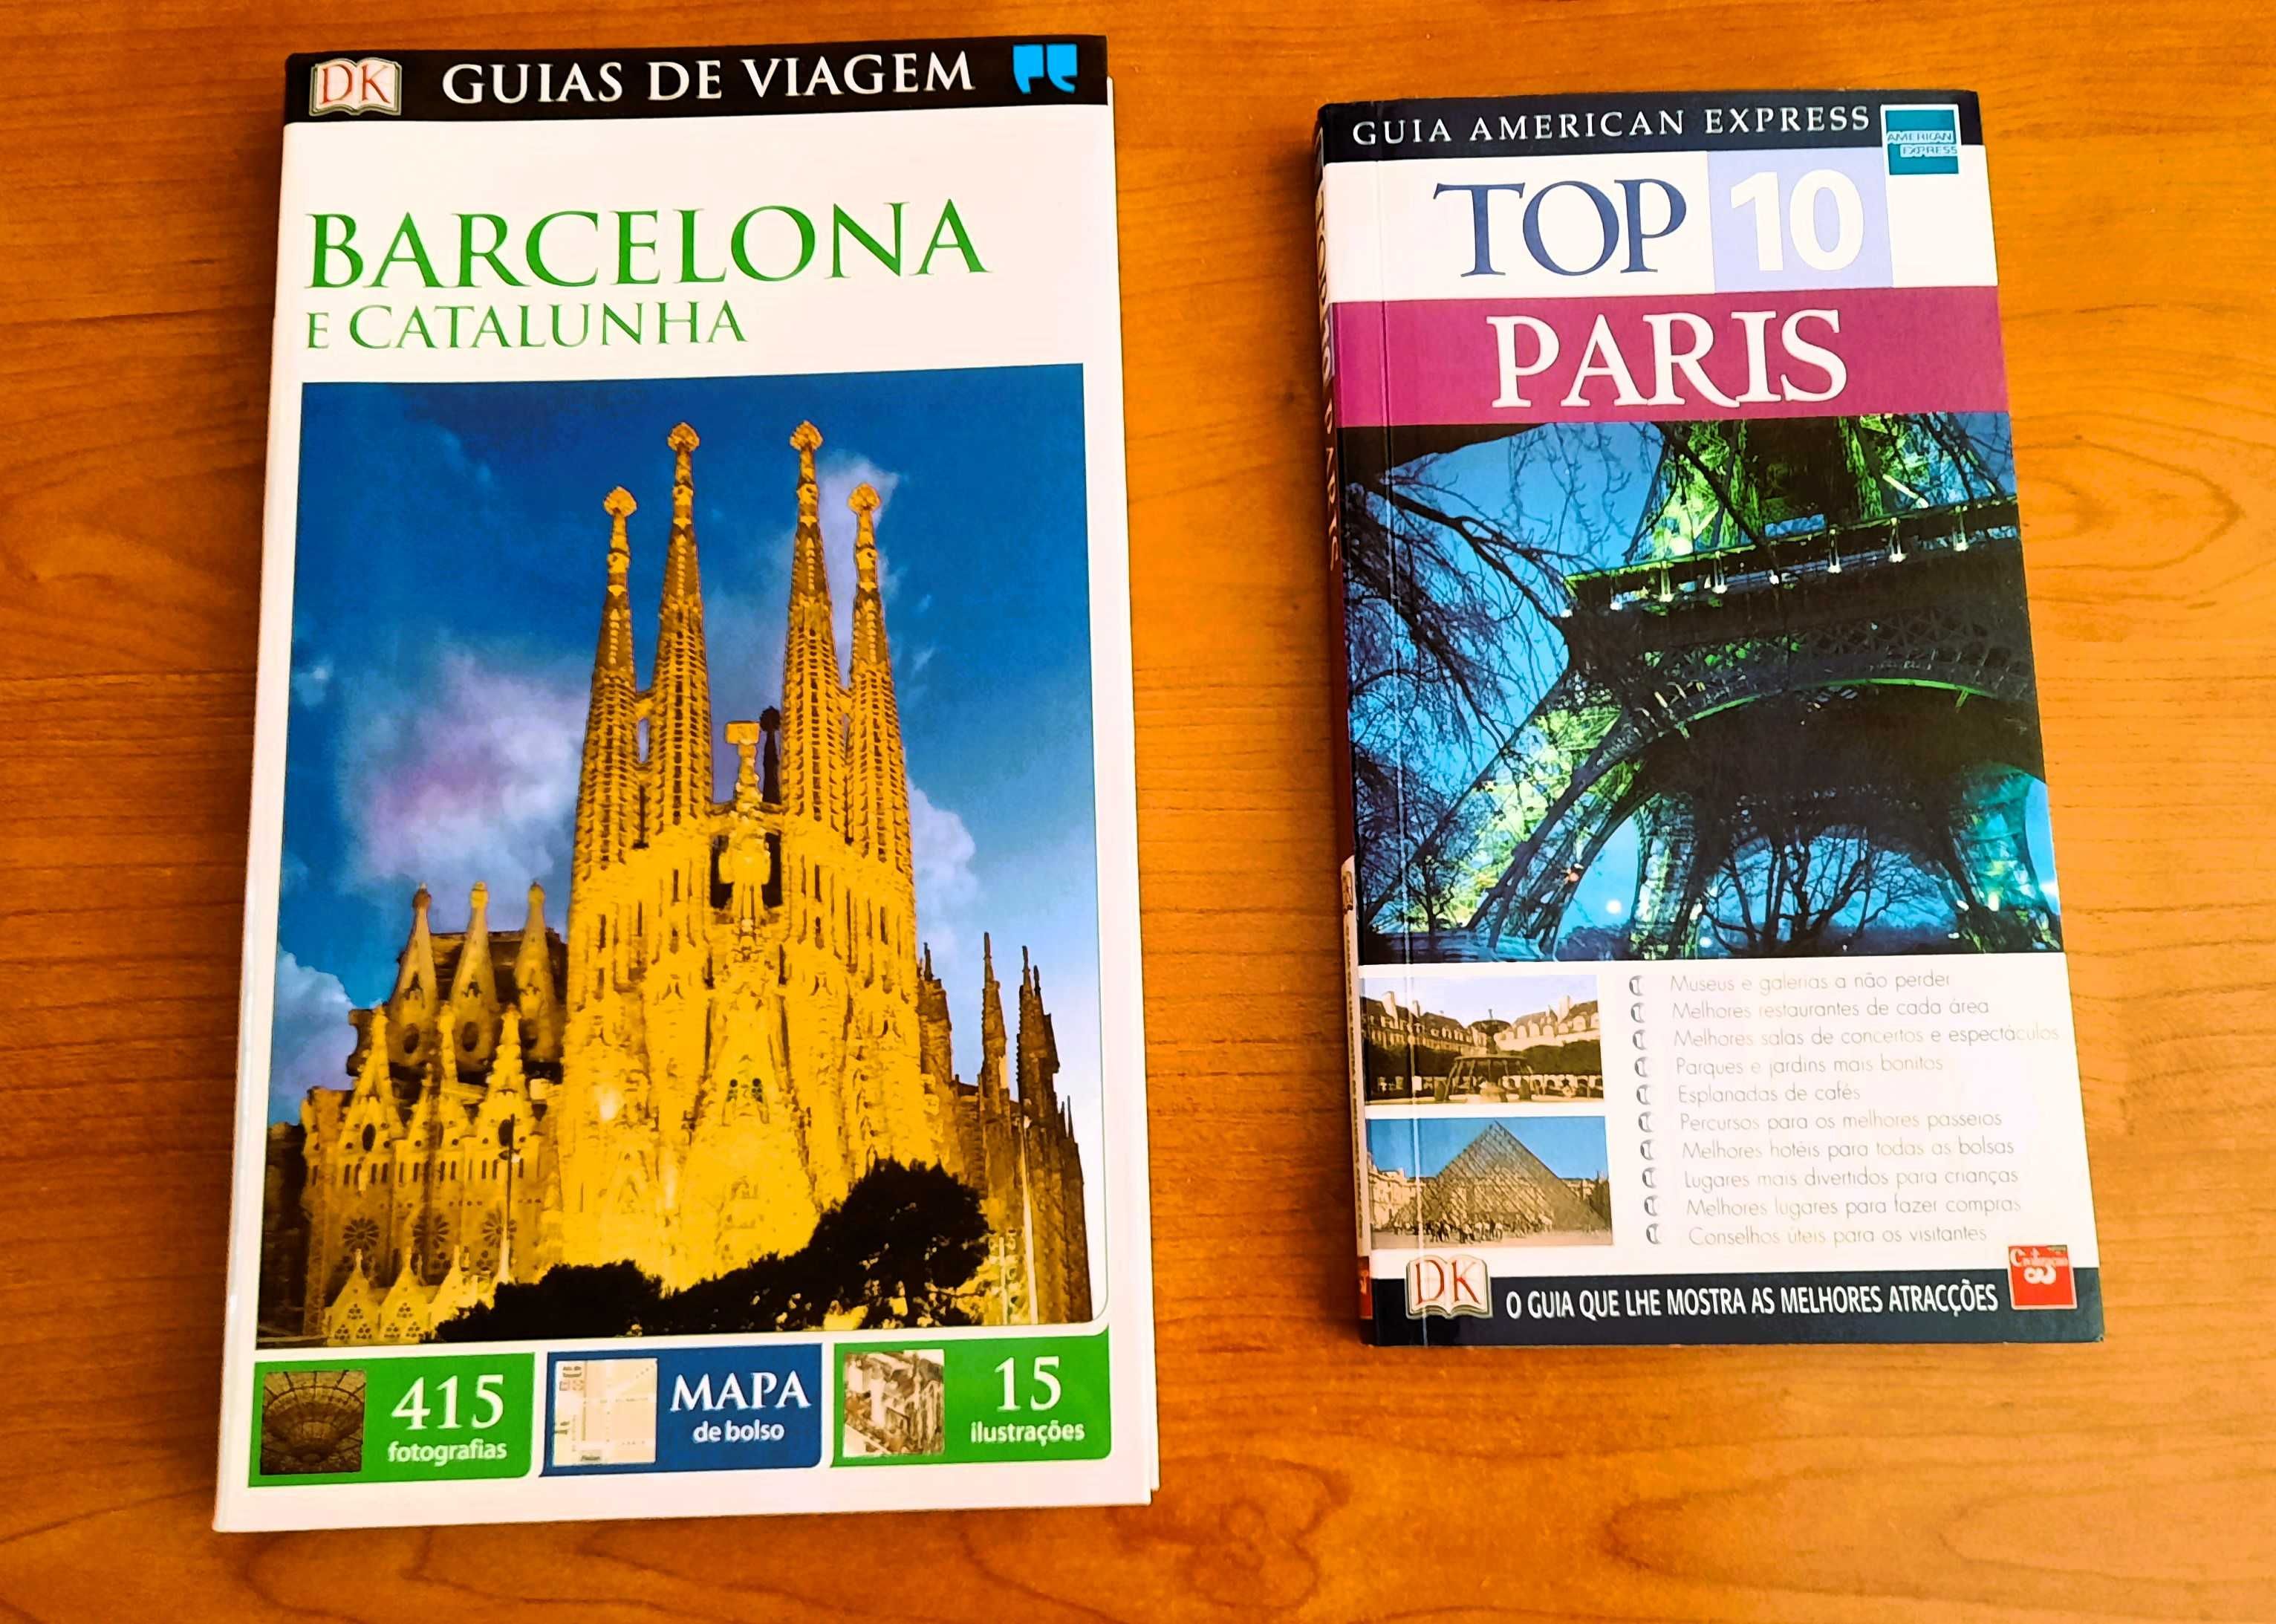 Barcelona e Catalunha + Top 10 Paris (Guias de Viagem)